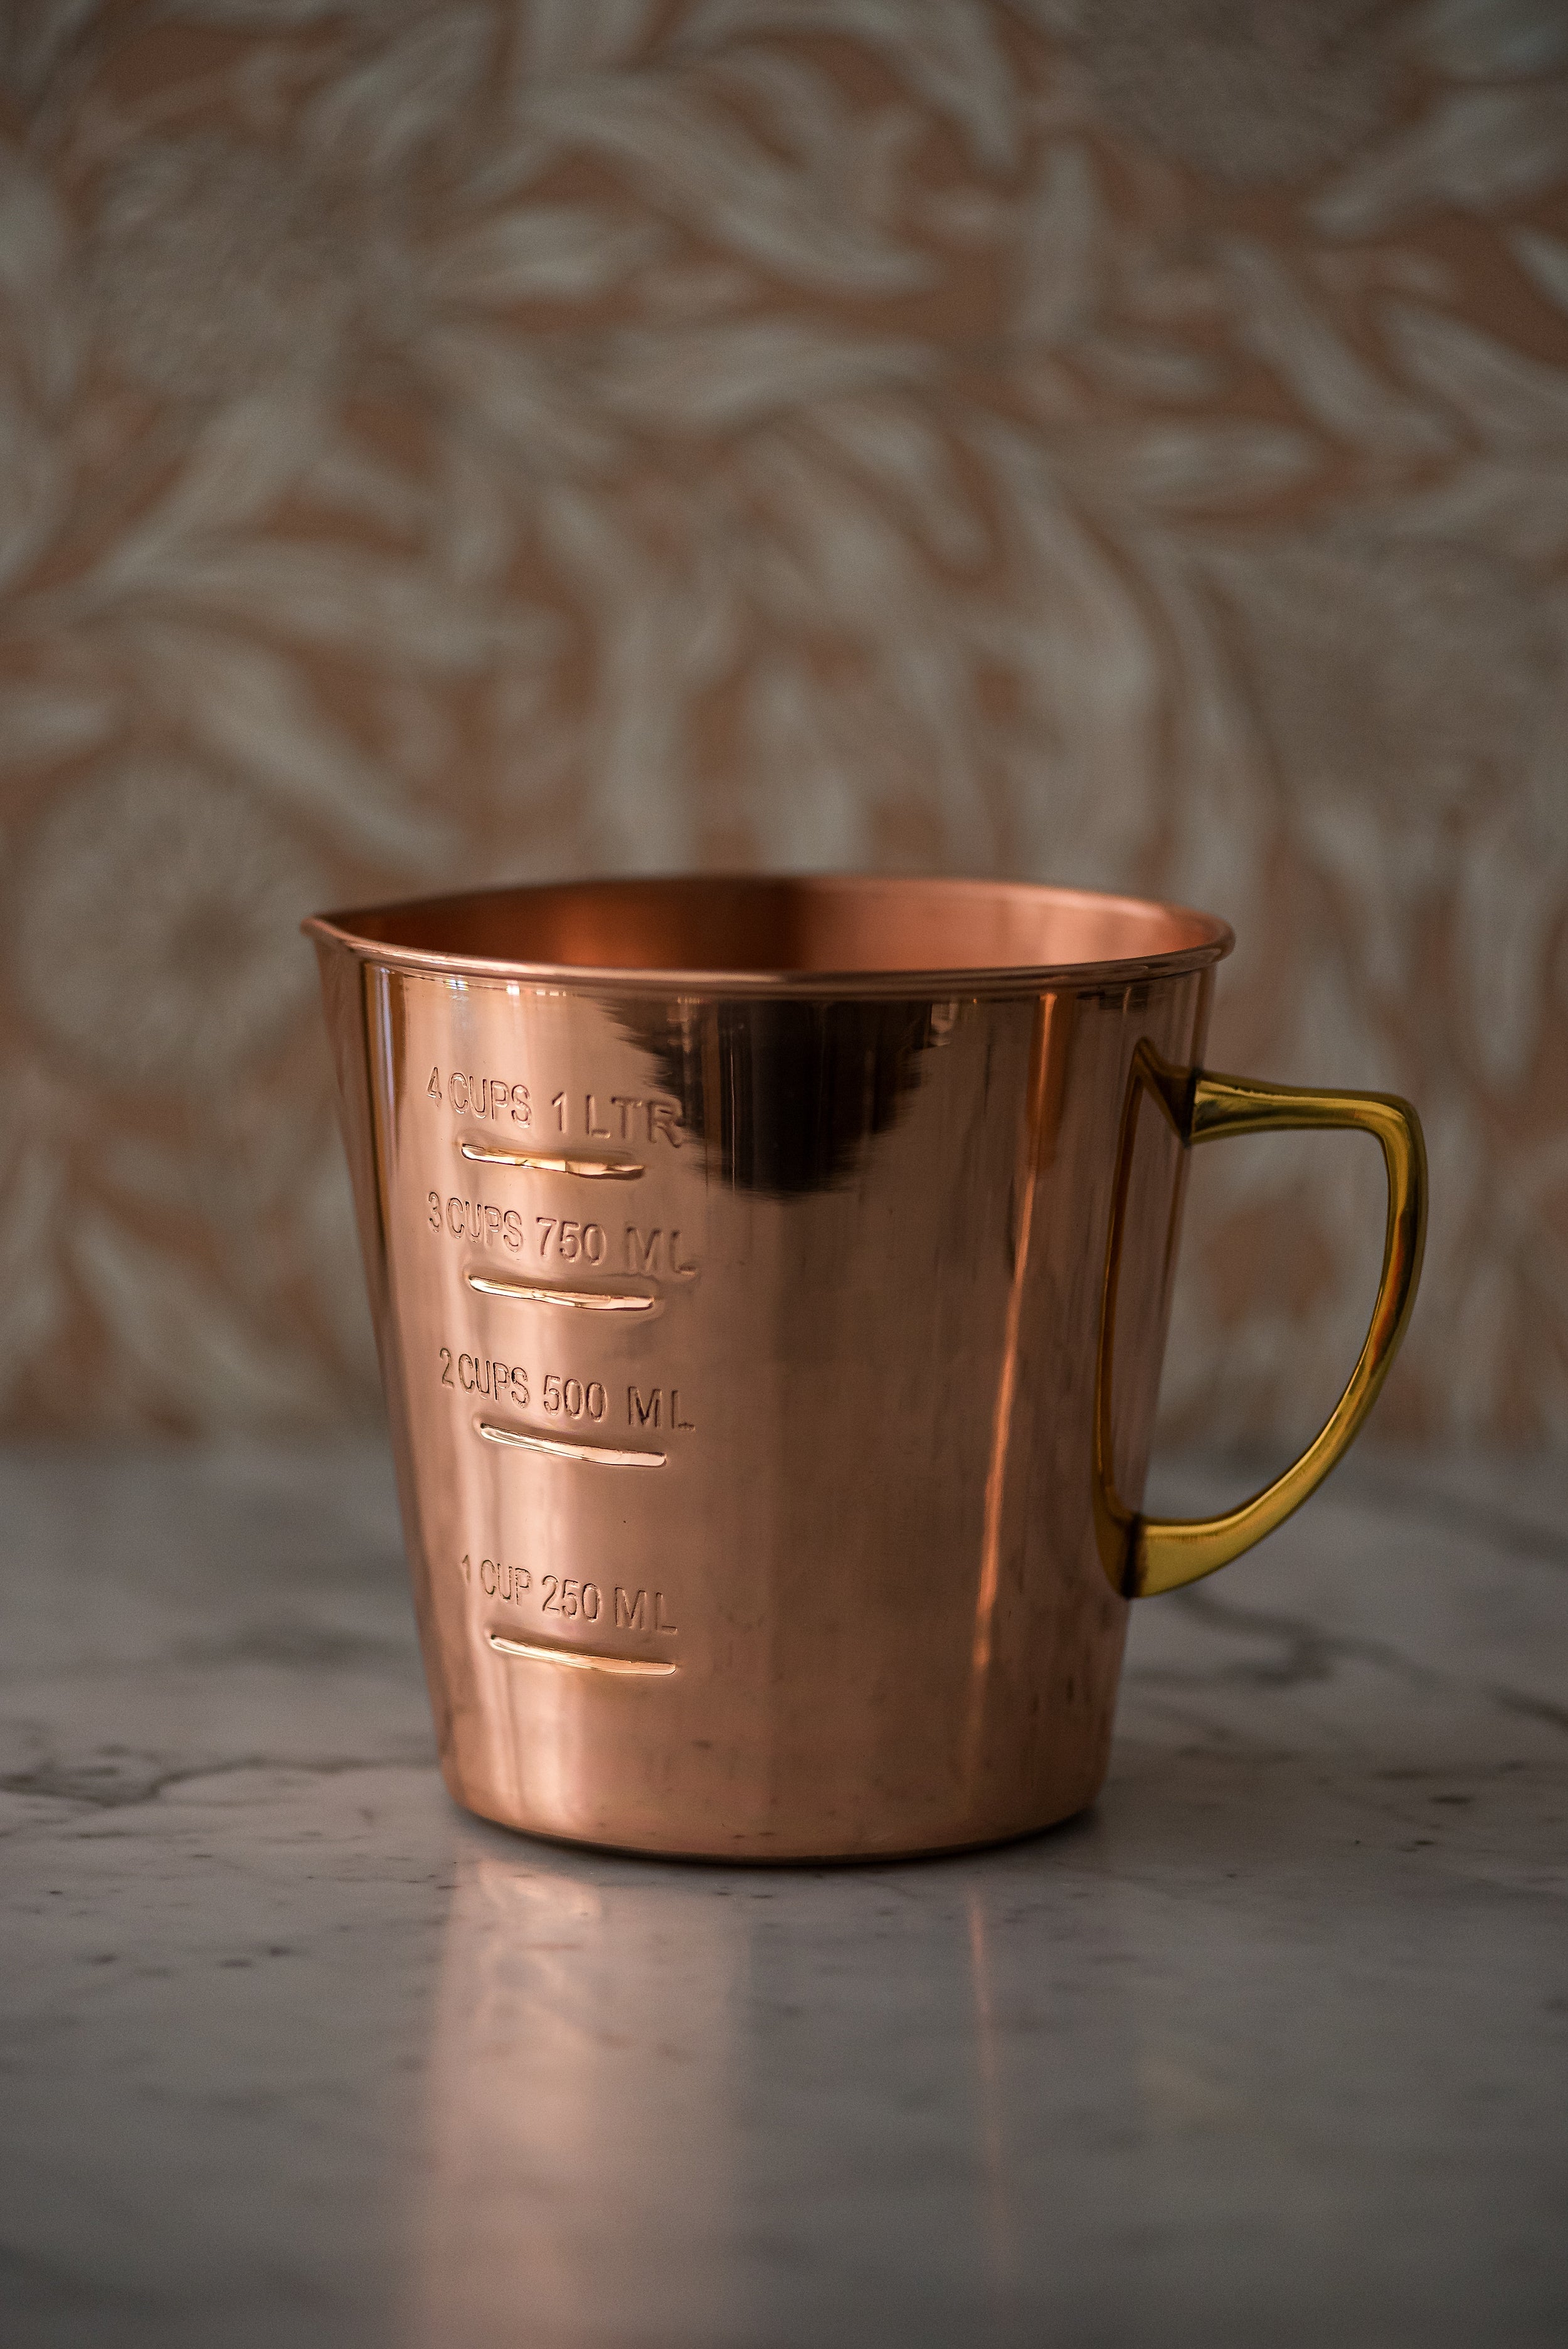 Copper & Brass Measuring Cups - Small Town Home & Decor